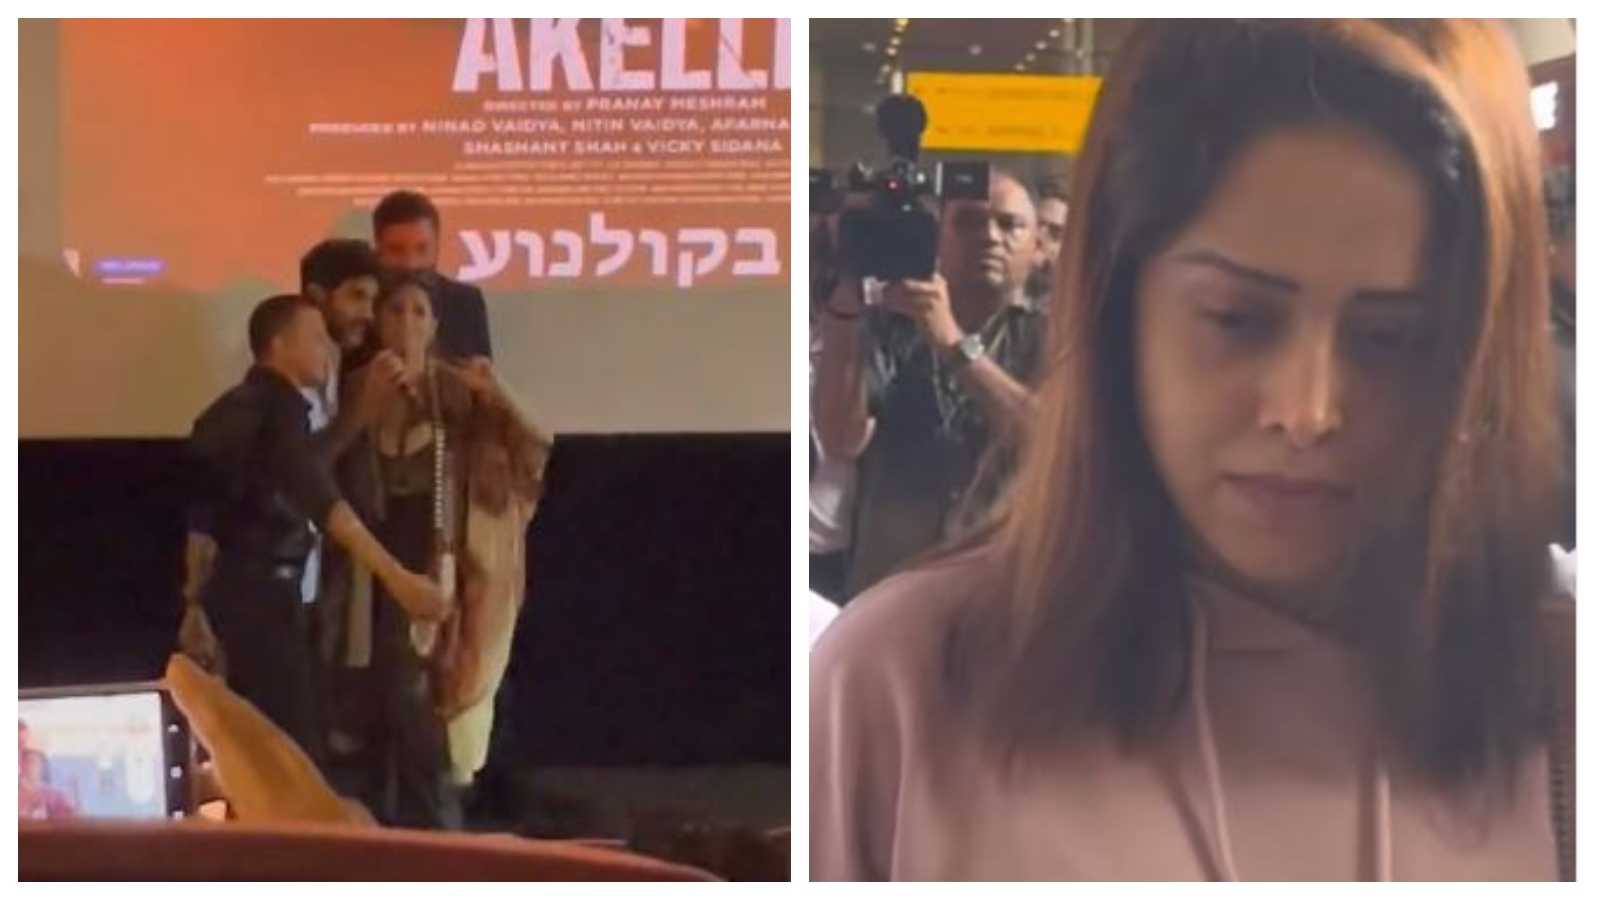 Israel-Palestine war: Nushrratt Bharuccha sings with Akelli co-star Tsahi Halevi in Israel before Hamas attack; Watch